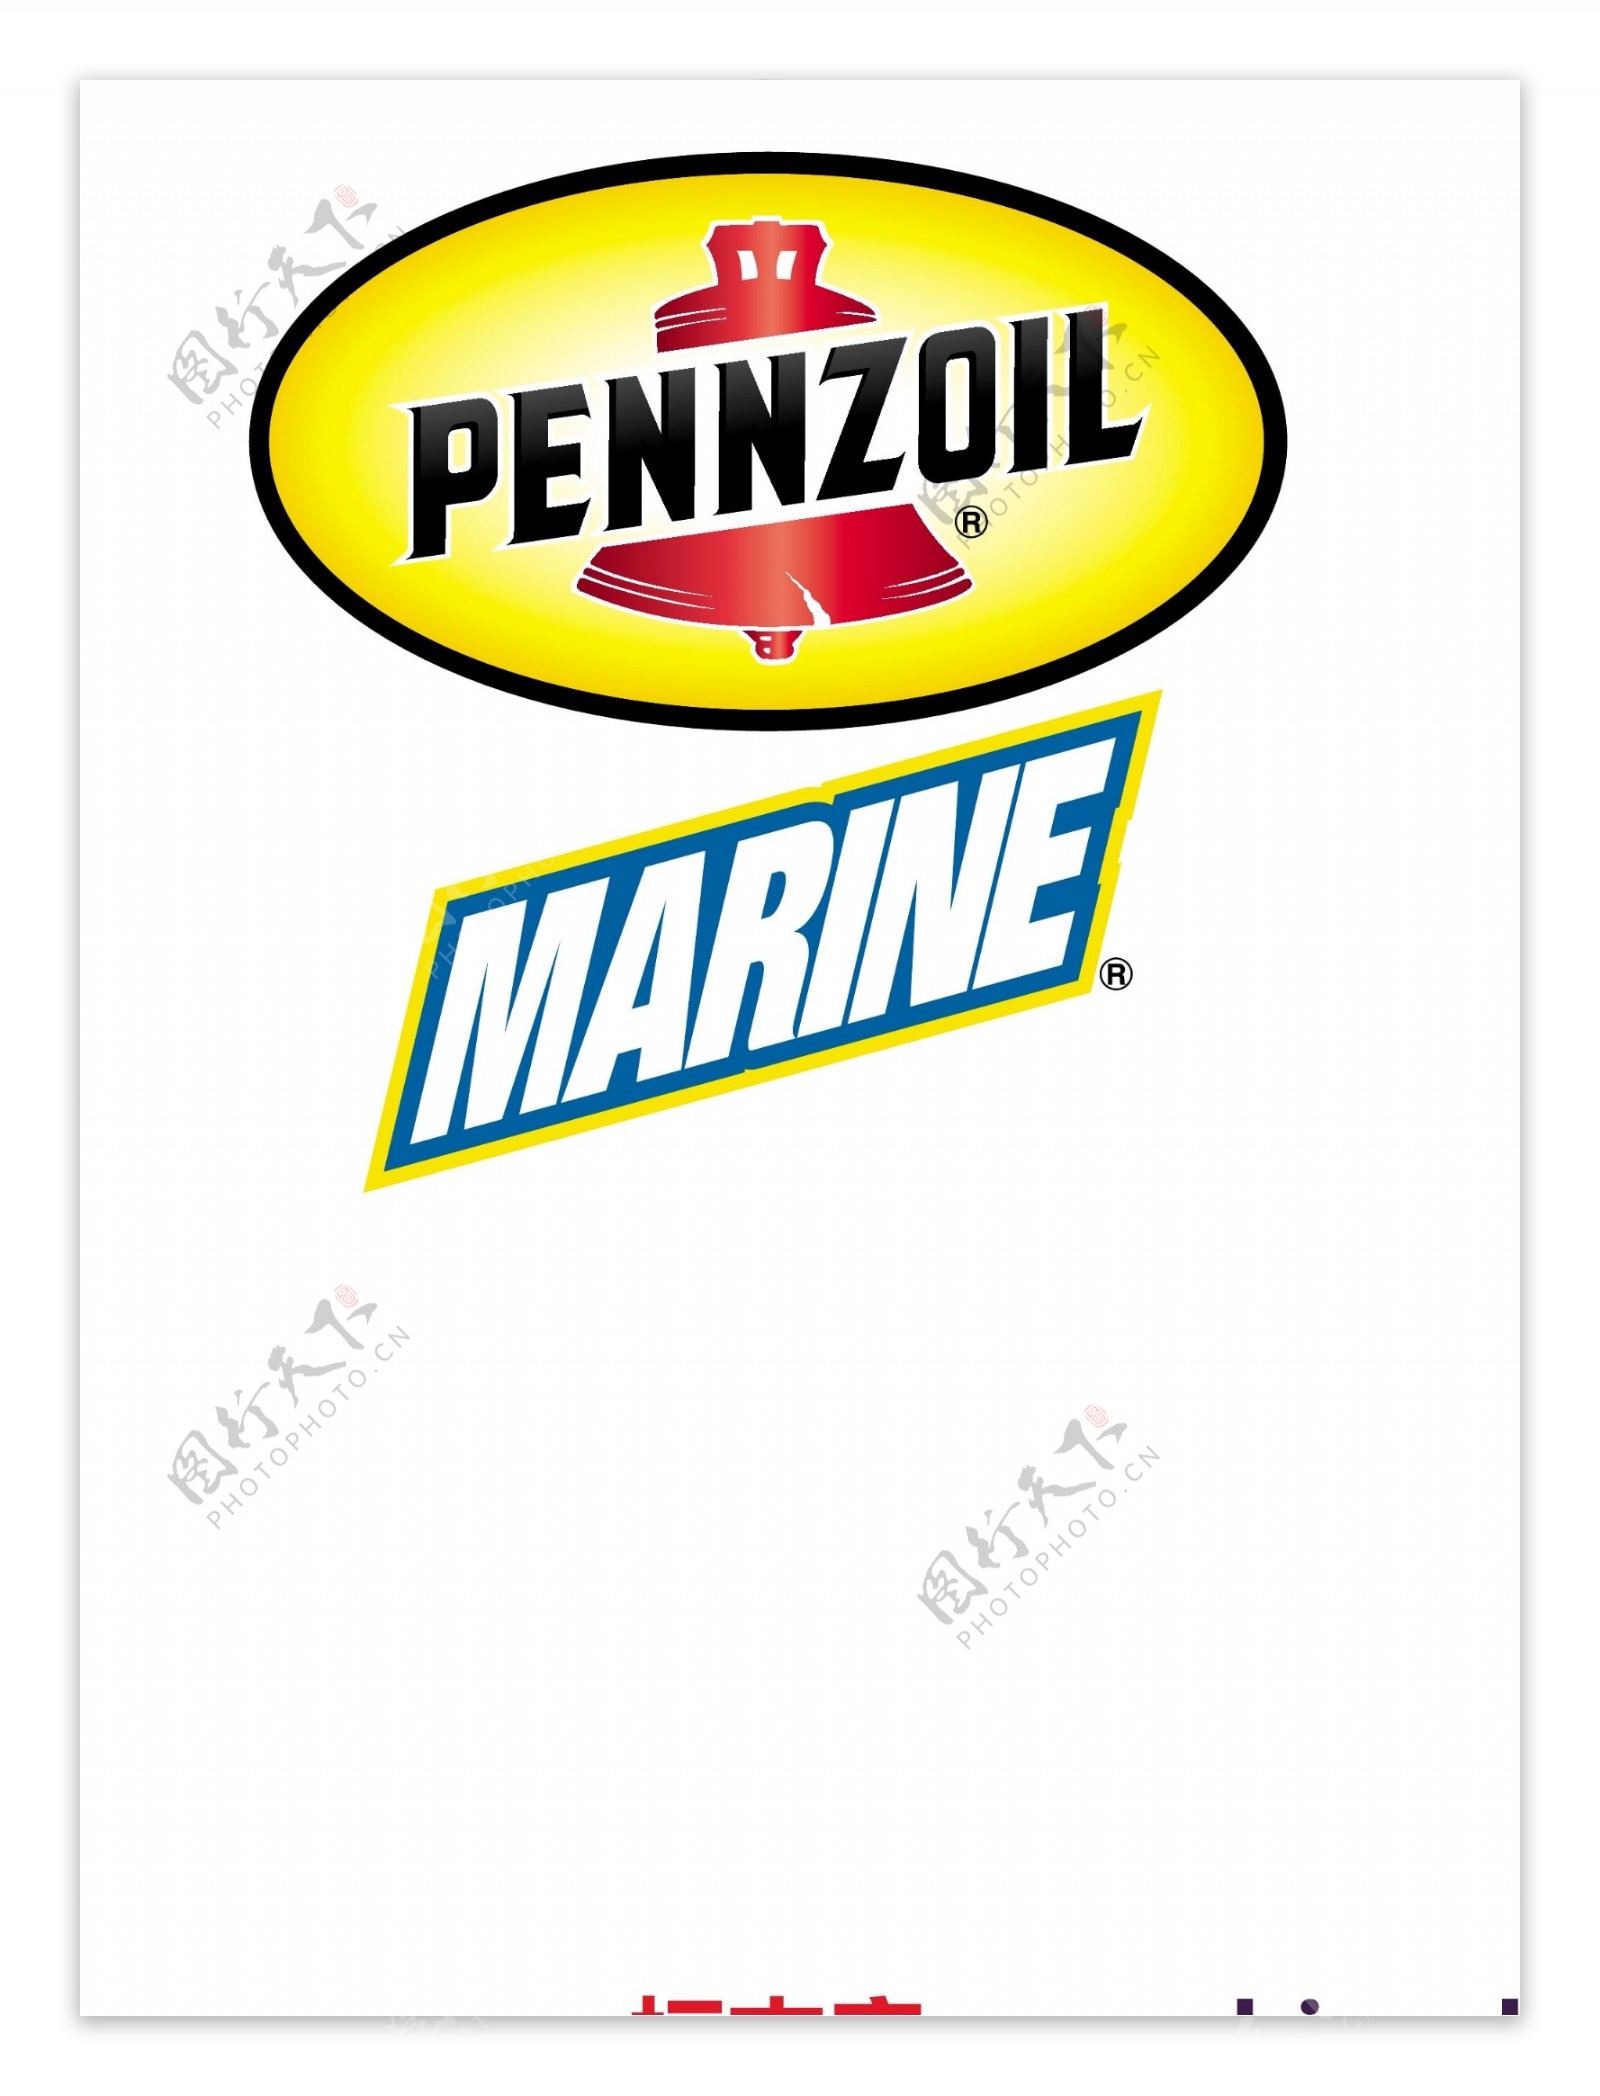 PennzoilMarinelogo设计欣赏PennzoilMarine轻工业LOGO下载标志设计欣赏